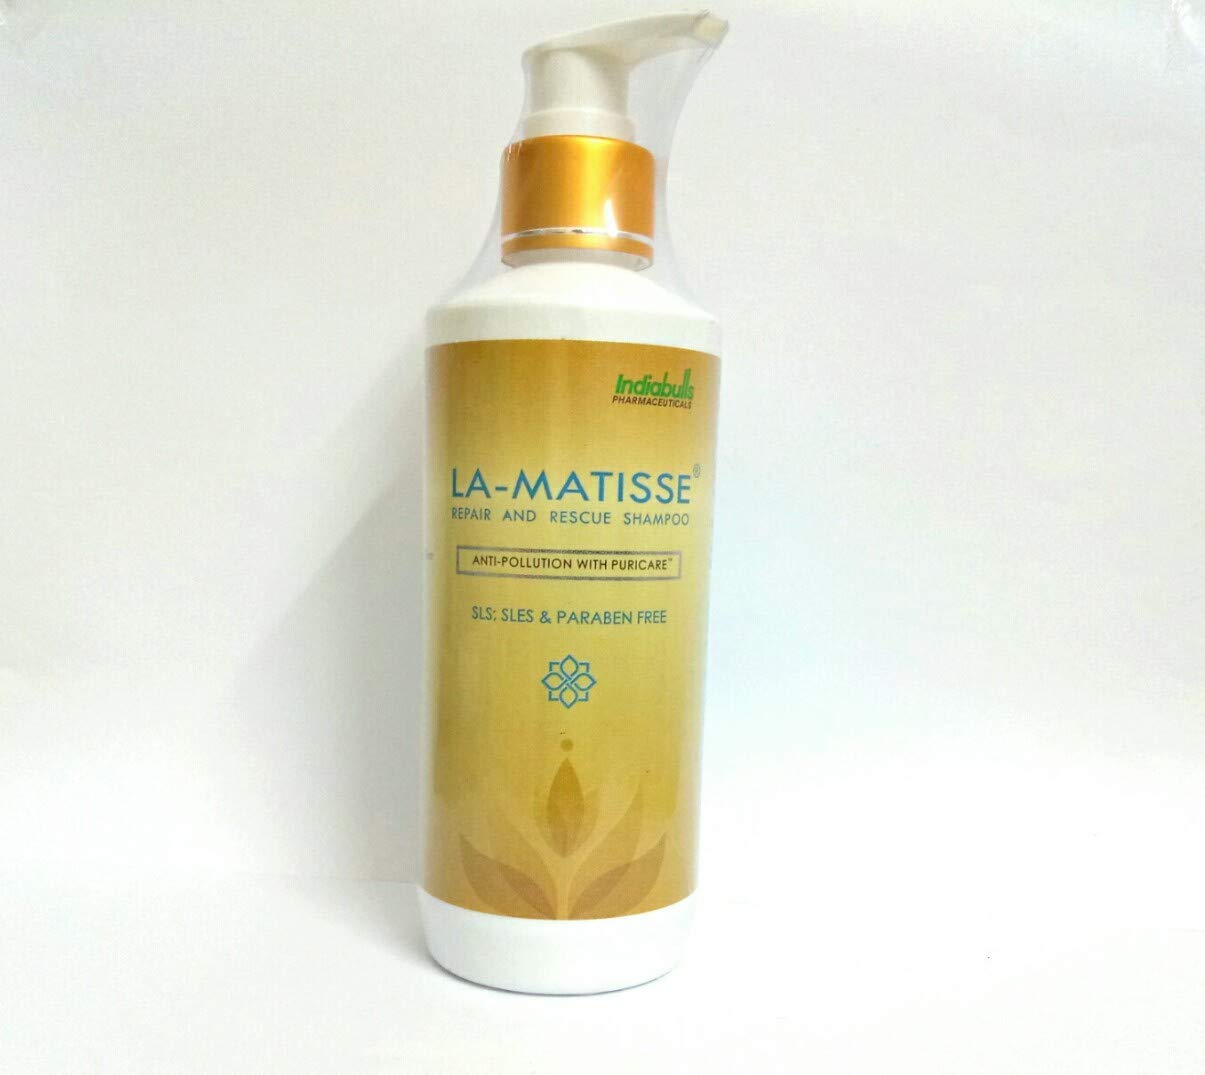 LA-MATISSE Repair and Rescue Shampoo 240ml